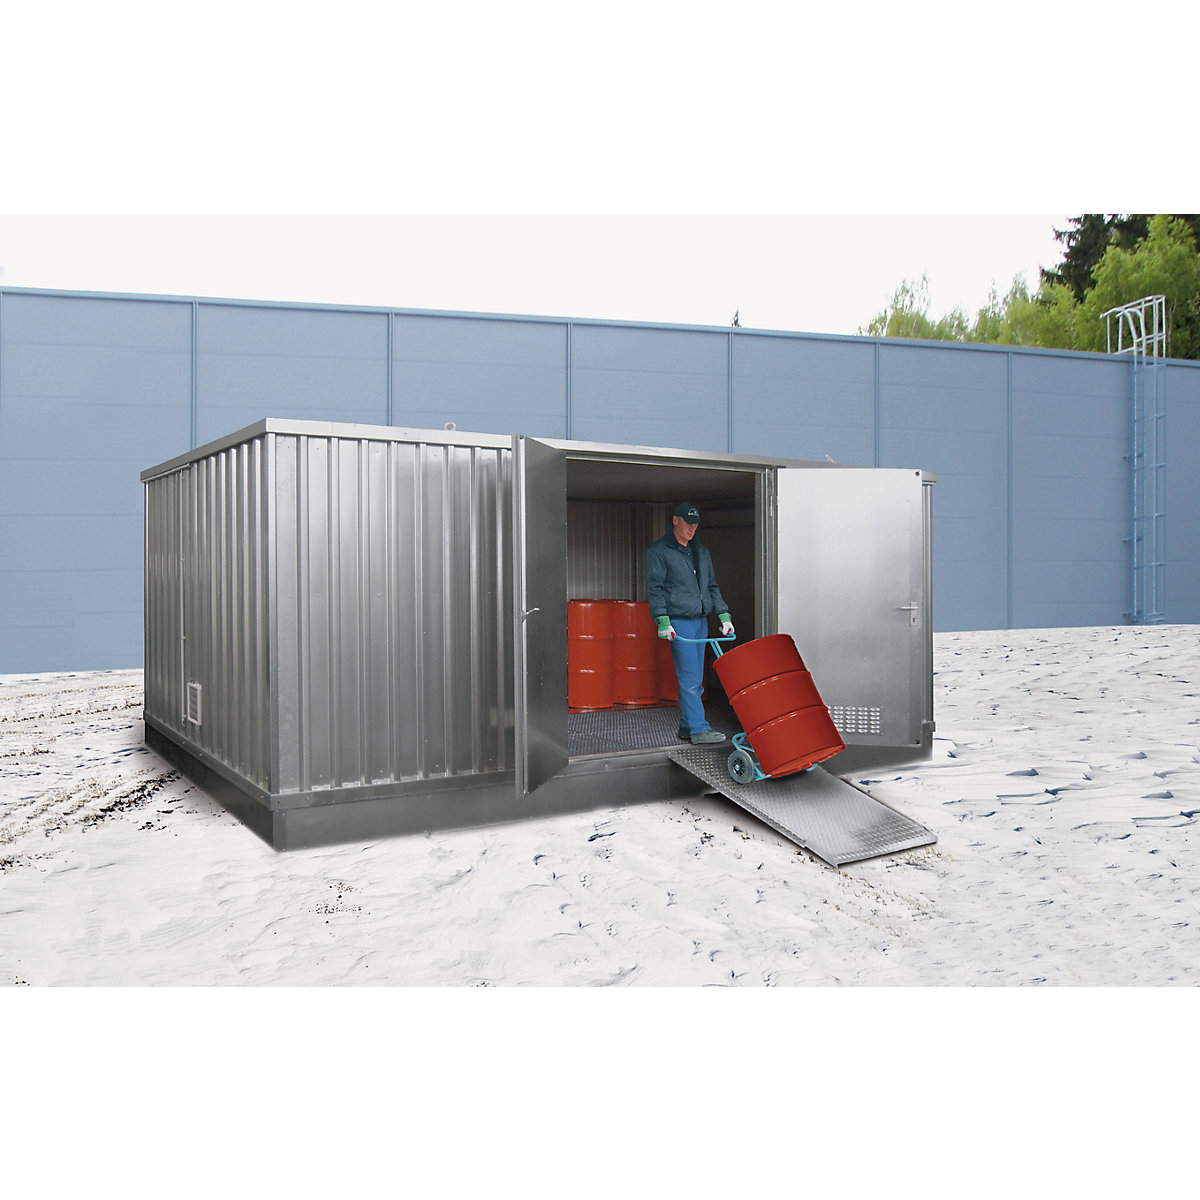 Skladovací kontejner pro hořlavá média, s izolací proti chladu (Obrázek výrobku 2)